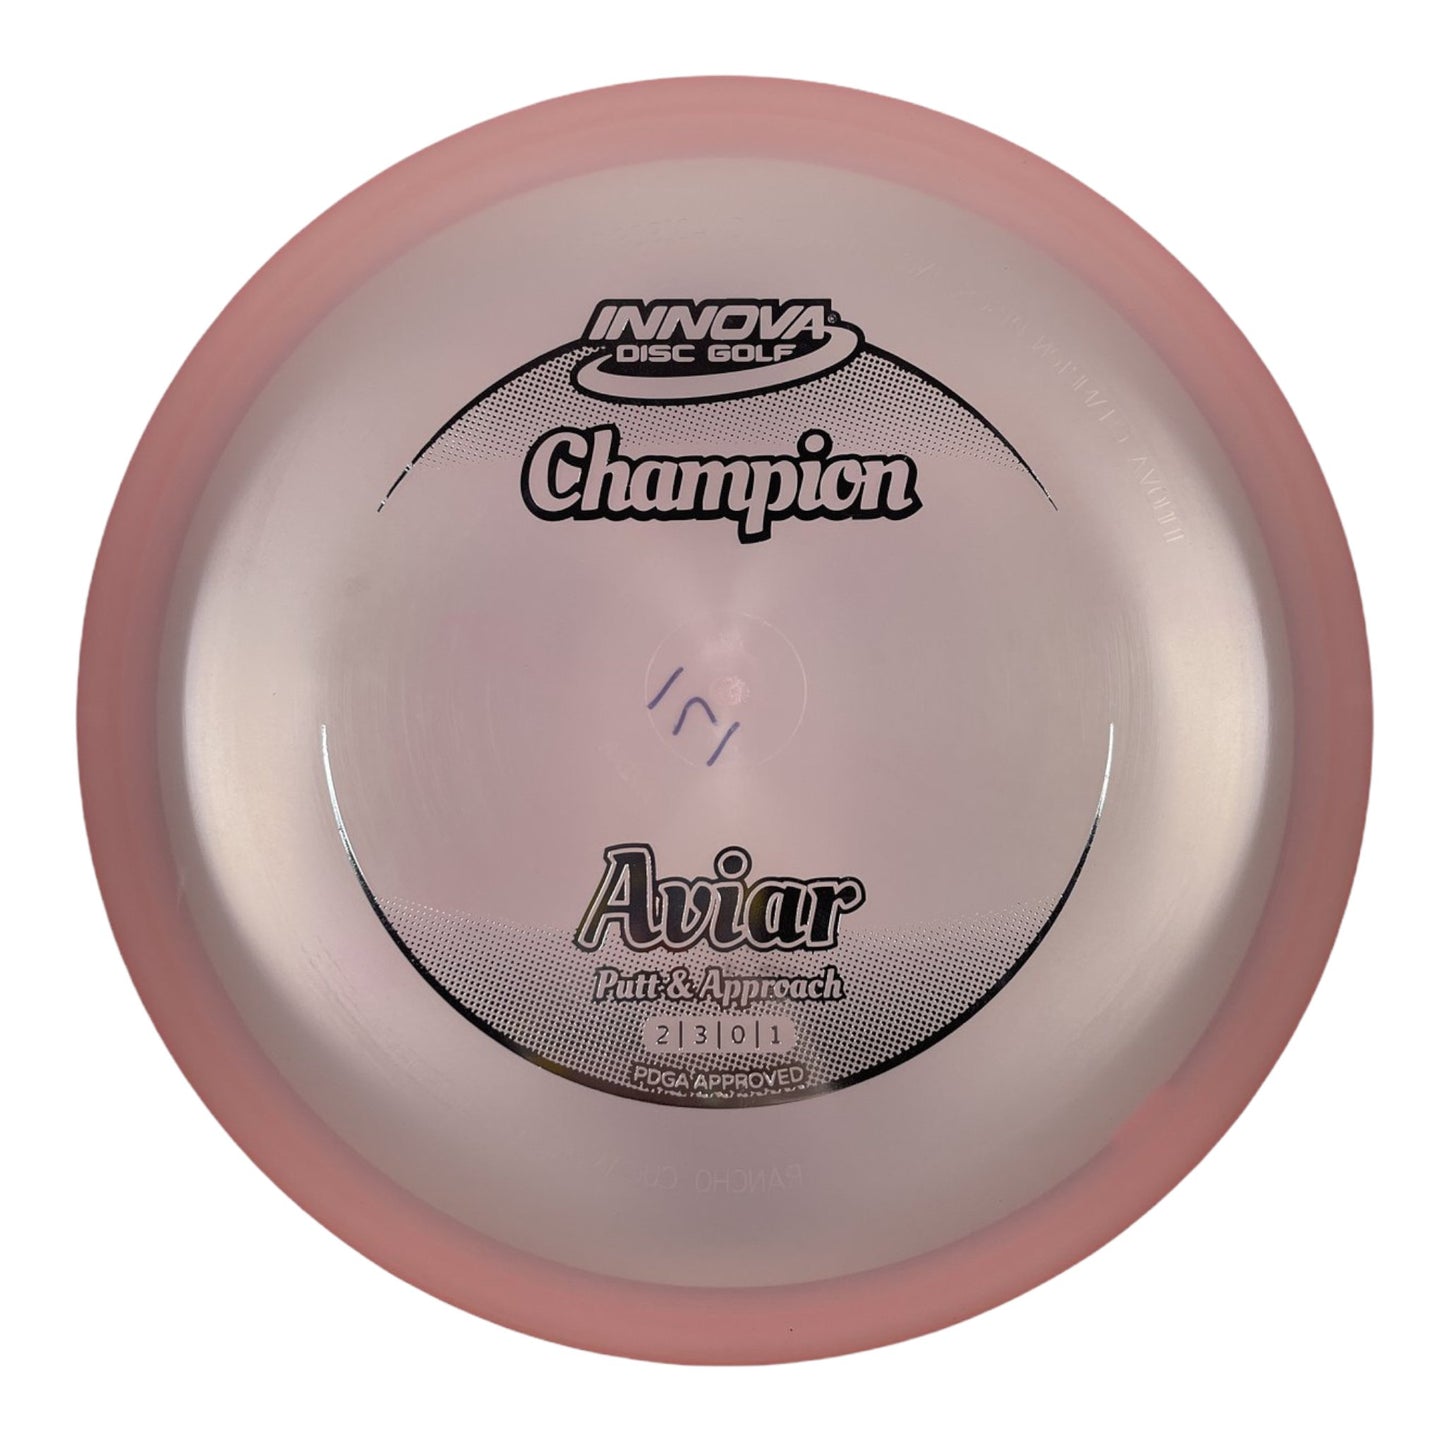 Innova Champion Discs Aviar | Champion | Pink/Silver 171g Disc Golf